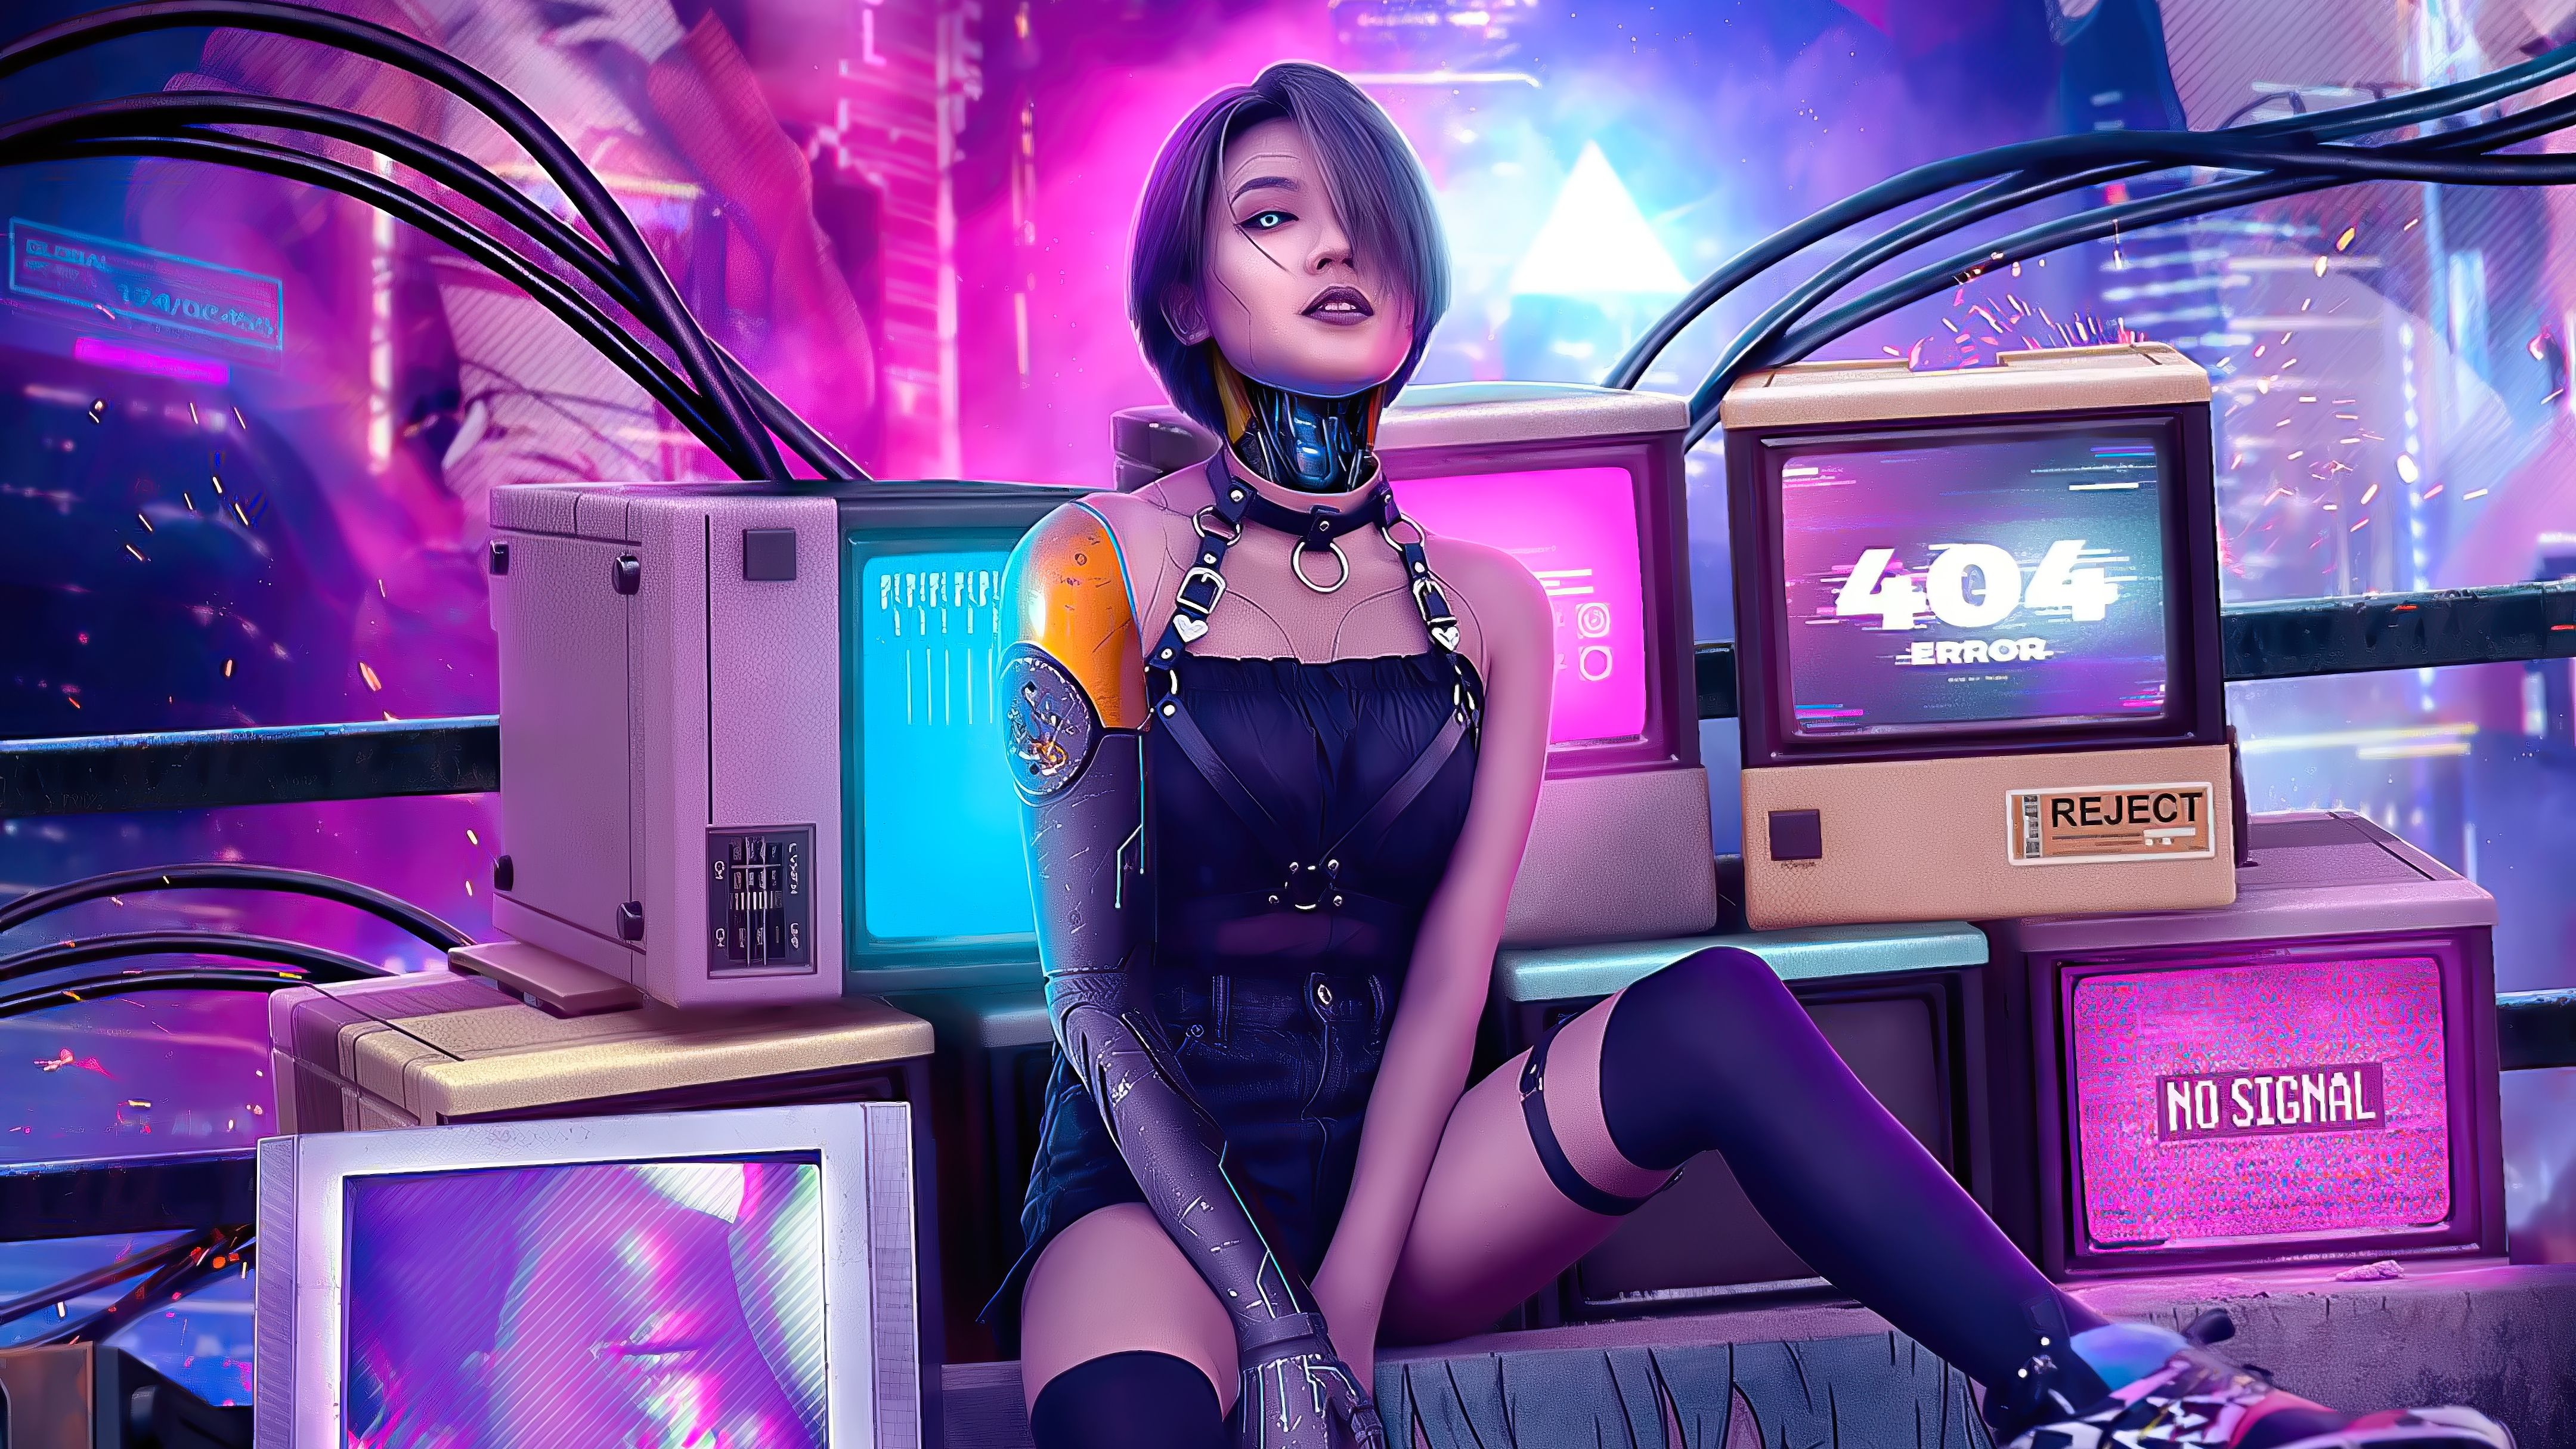 Cool Cyberpunk Cyborg Girl Wallpaper, HD Games 4K Wallpaper, Image, Photo and Background